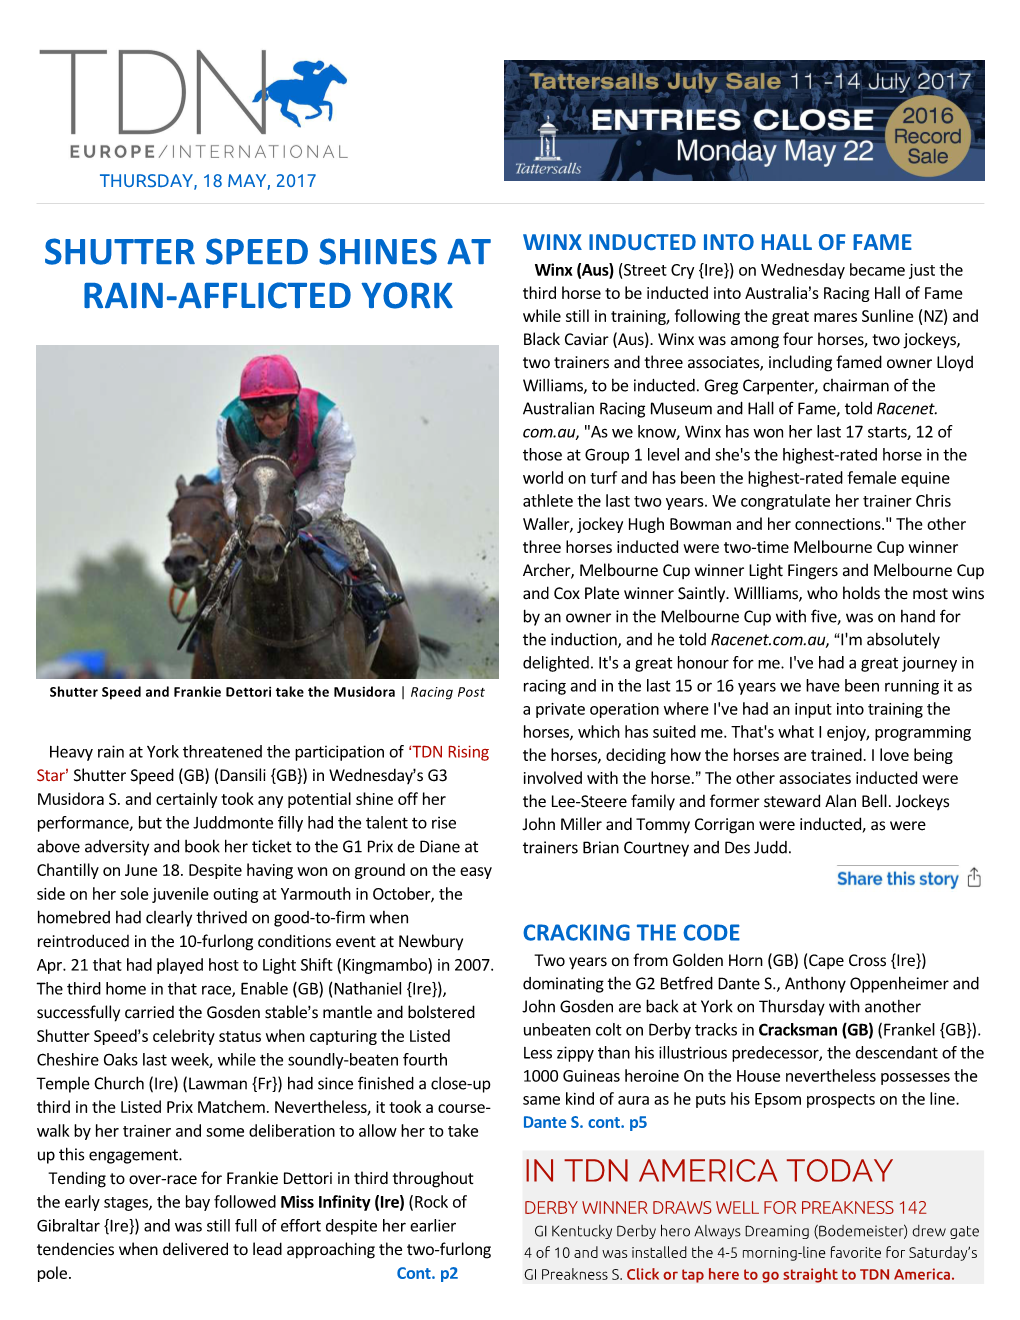 Shutter Speed Shines at Rain-Afflicted York